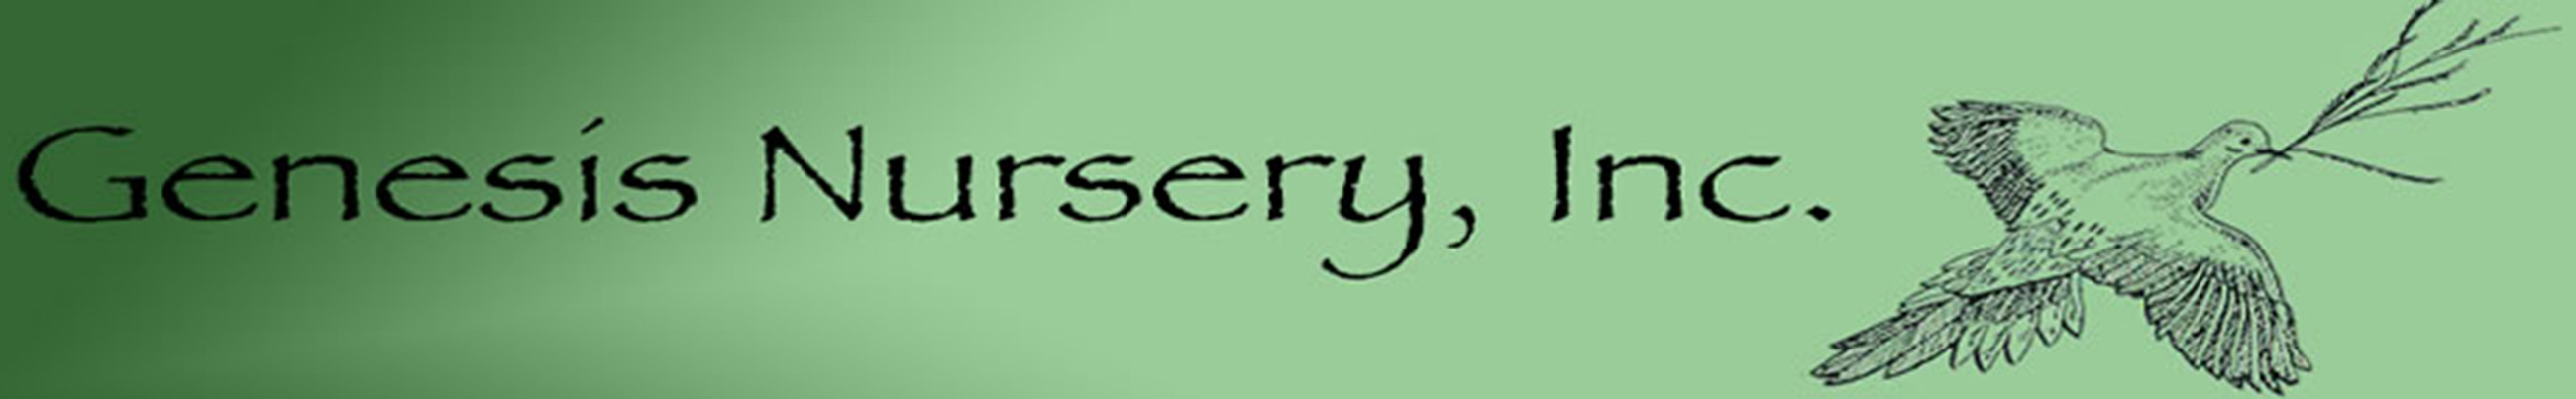 Genesis Nursery, Inc.